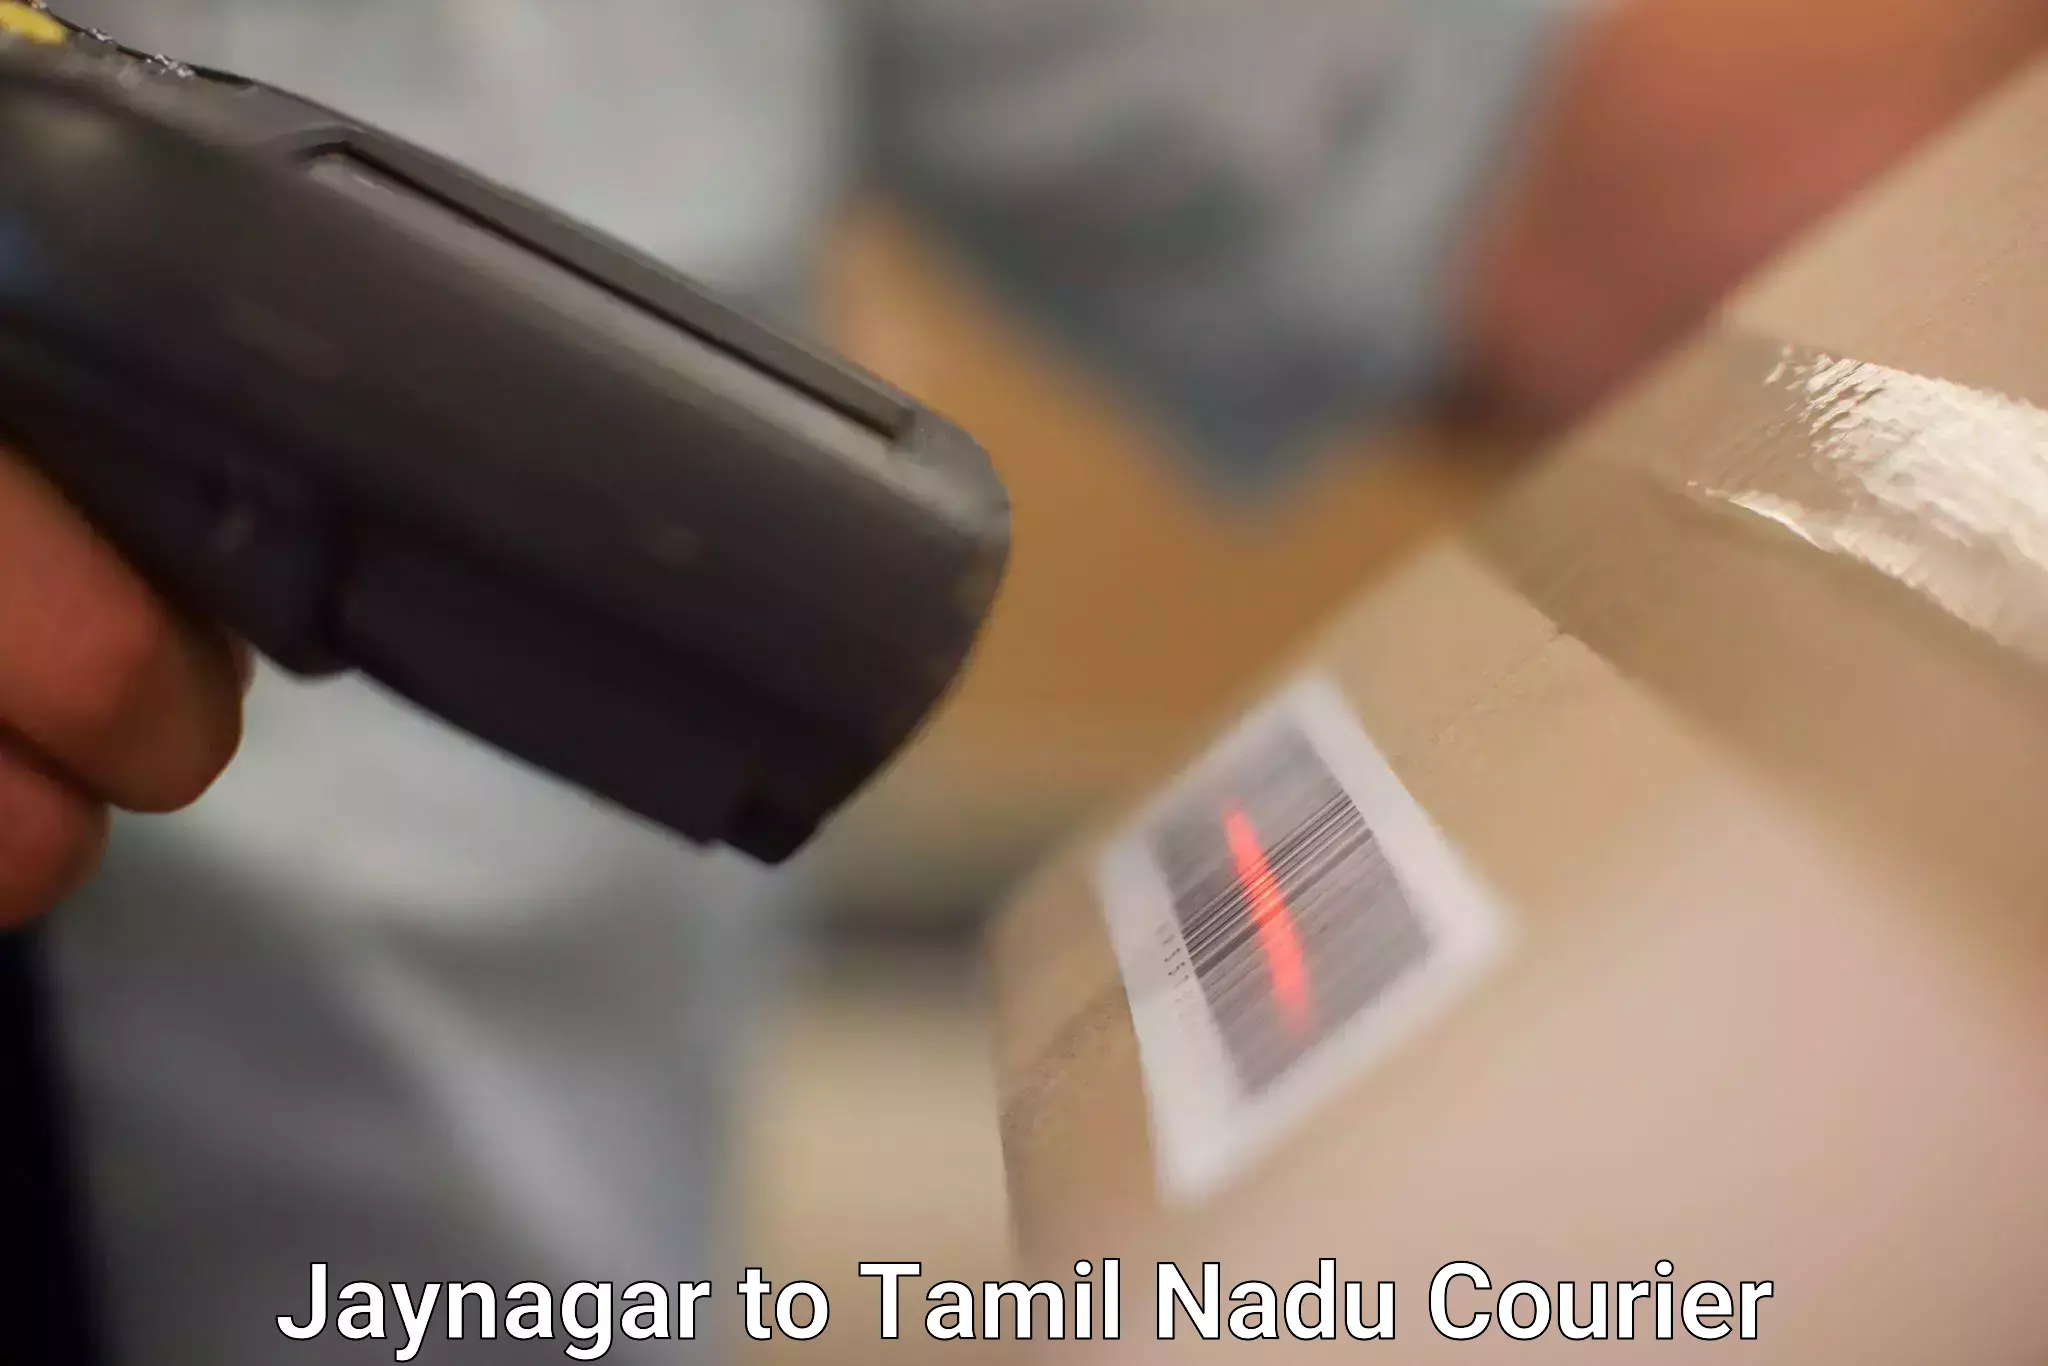 Smart shipping technology Jaynagar to Melur